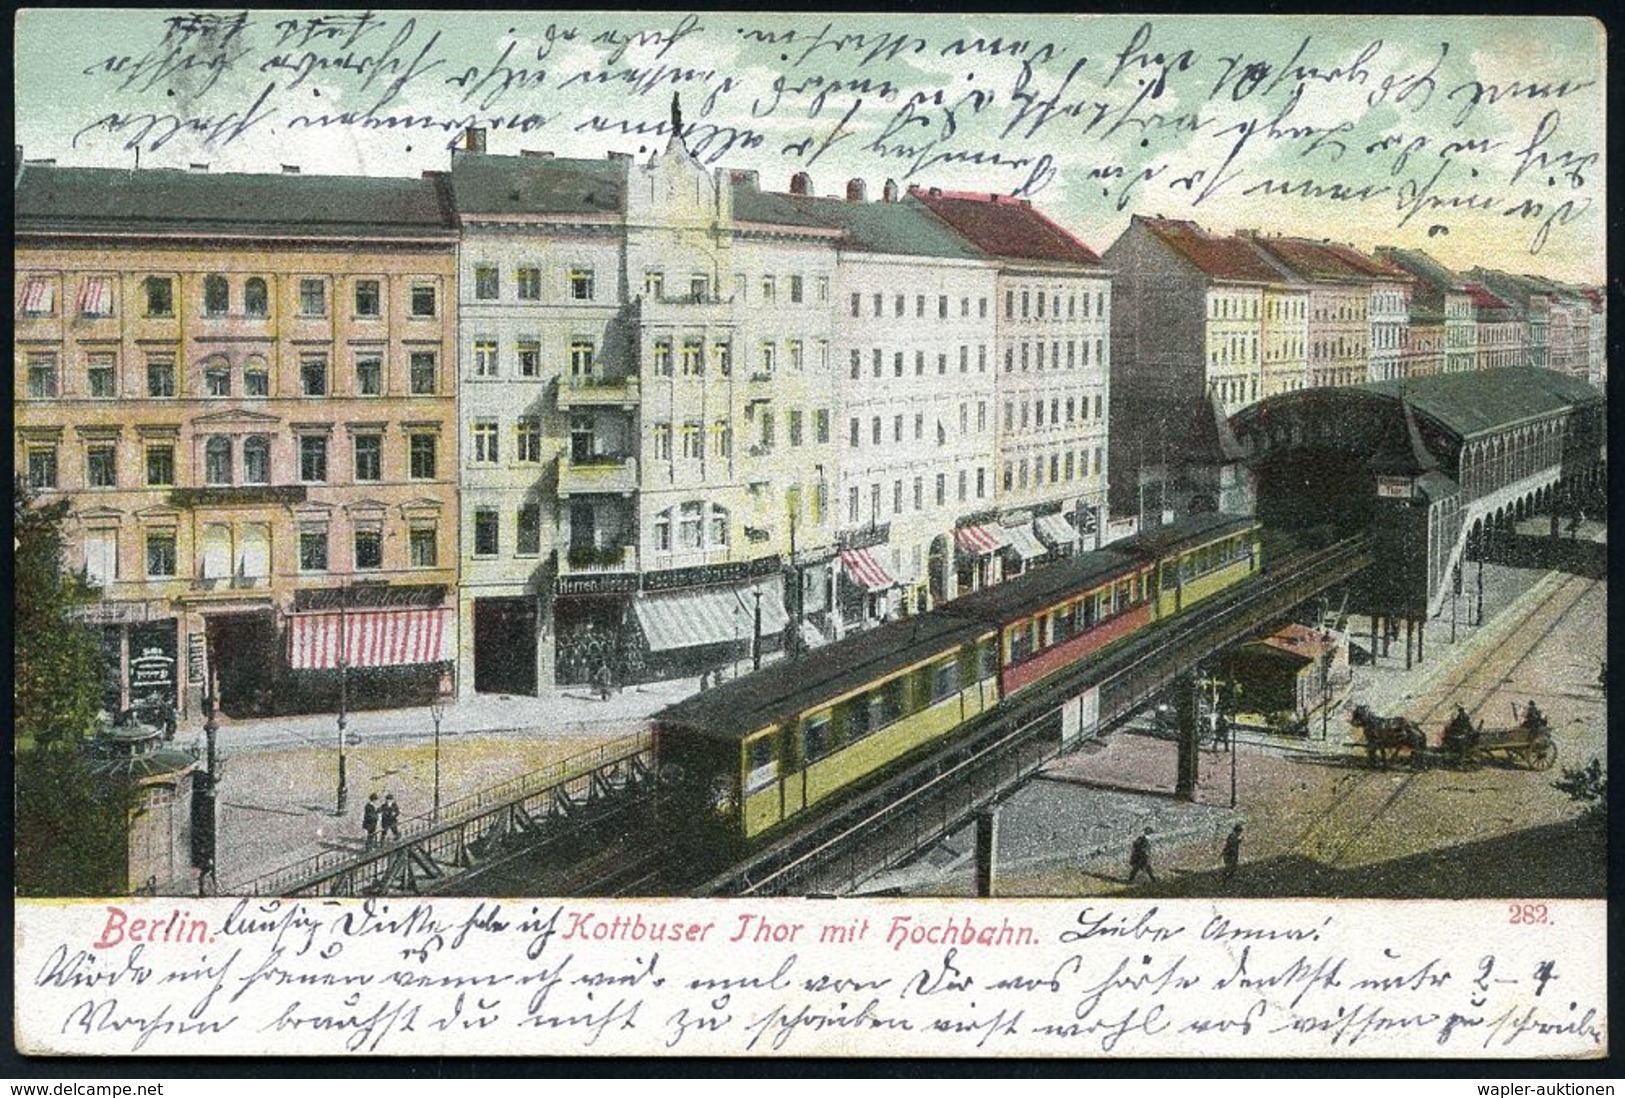 UNTERGRUNDBAHN /U-BAHN : Berlin-Kreuzberg 1902/11 U-Bahnhof Cottbuser Tor, 8 Verschiedene S/w.- U. Color-Foto-Ak. , Meis - Treni